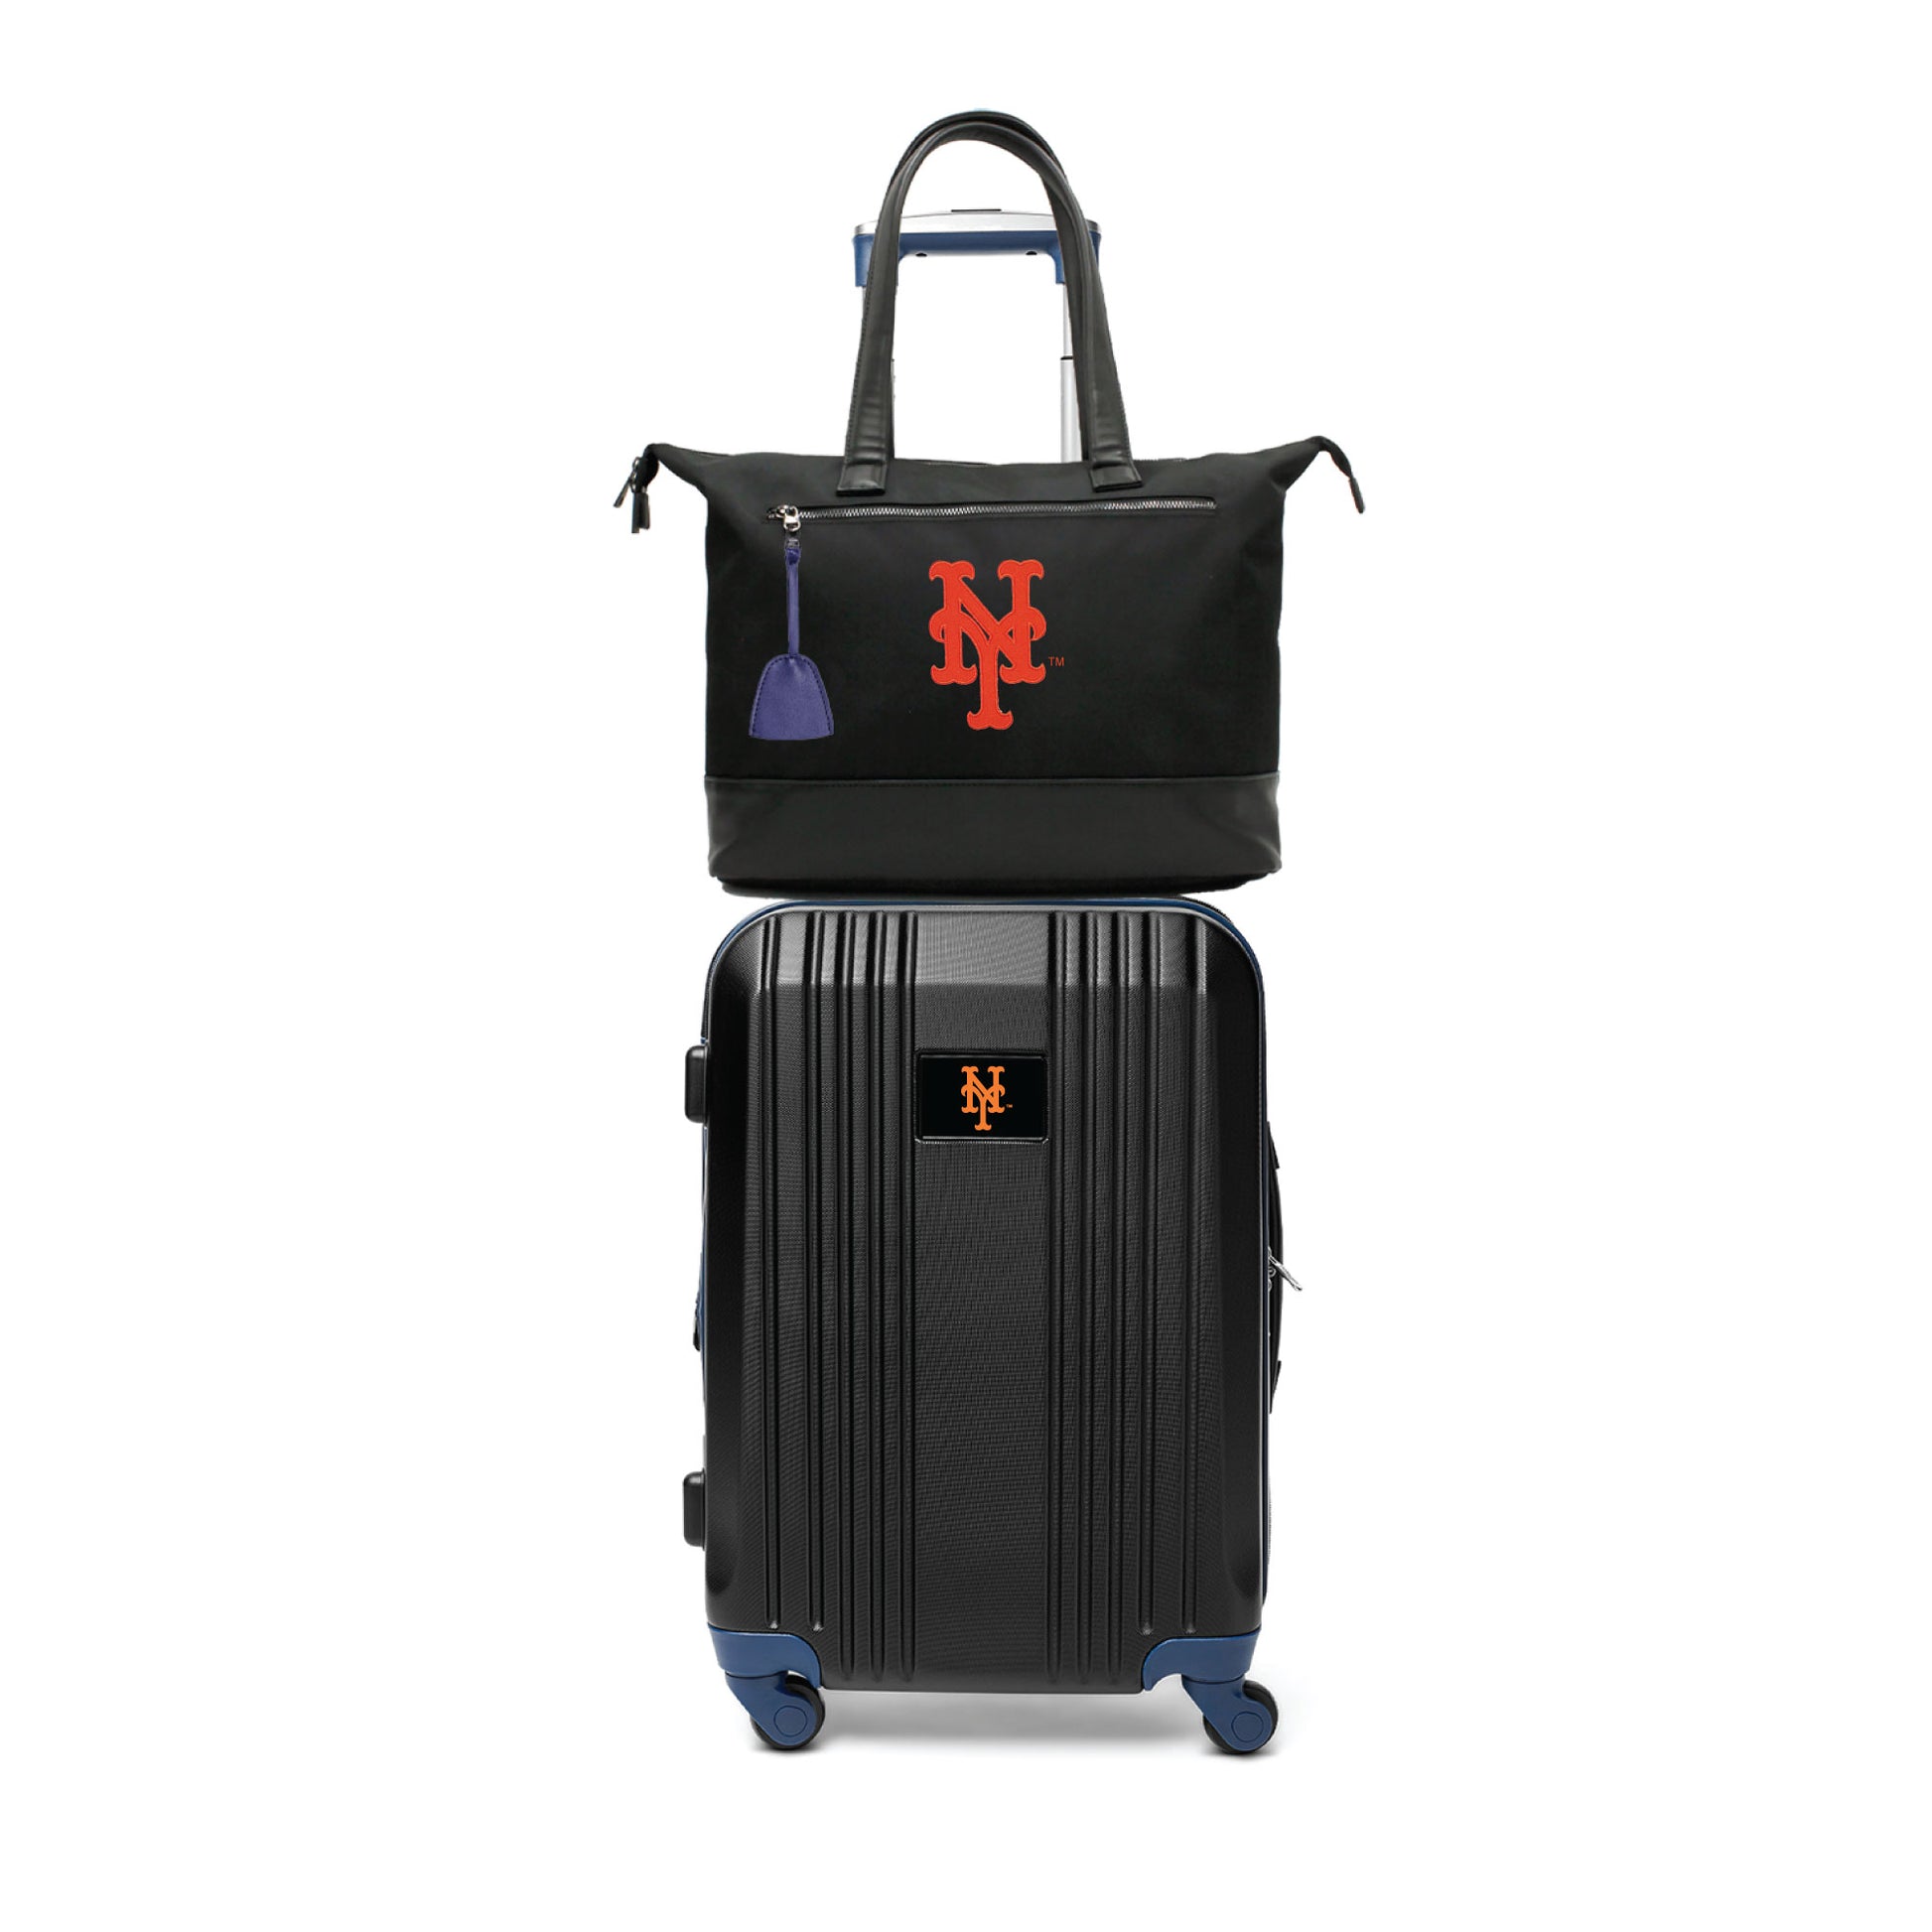 New York Mets Premium Laptop Tote Bag and Luggage Set